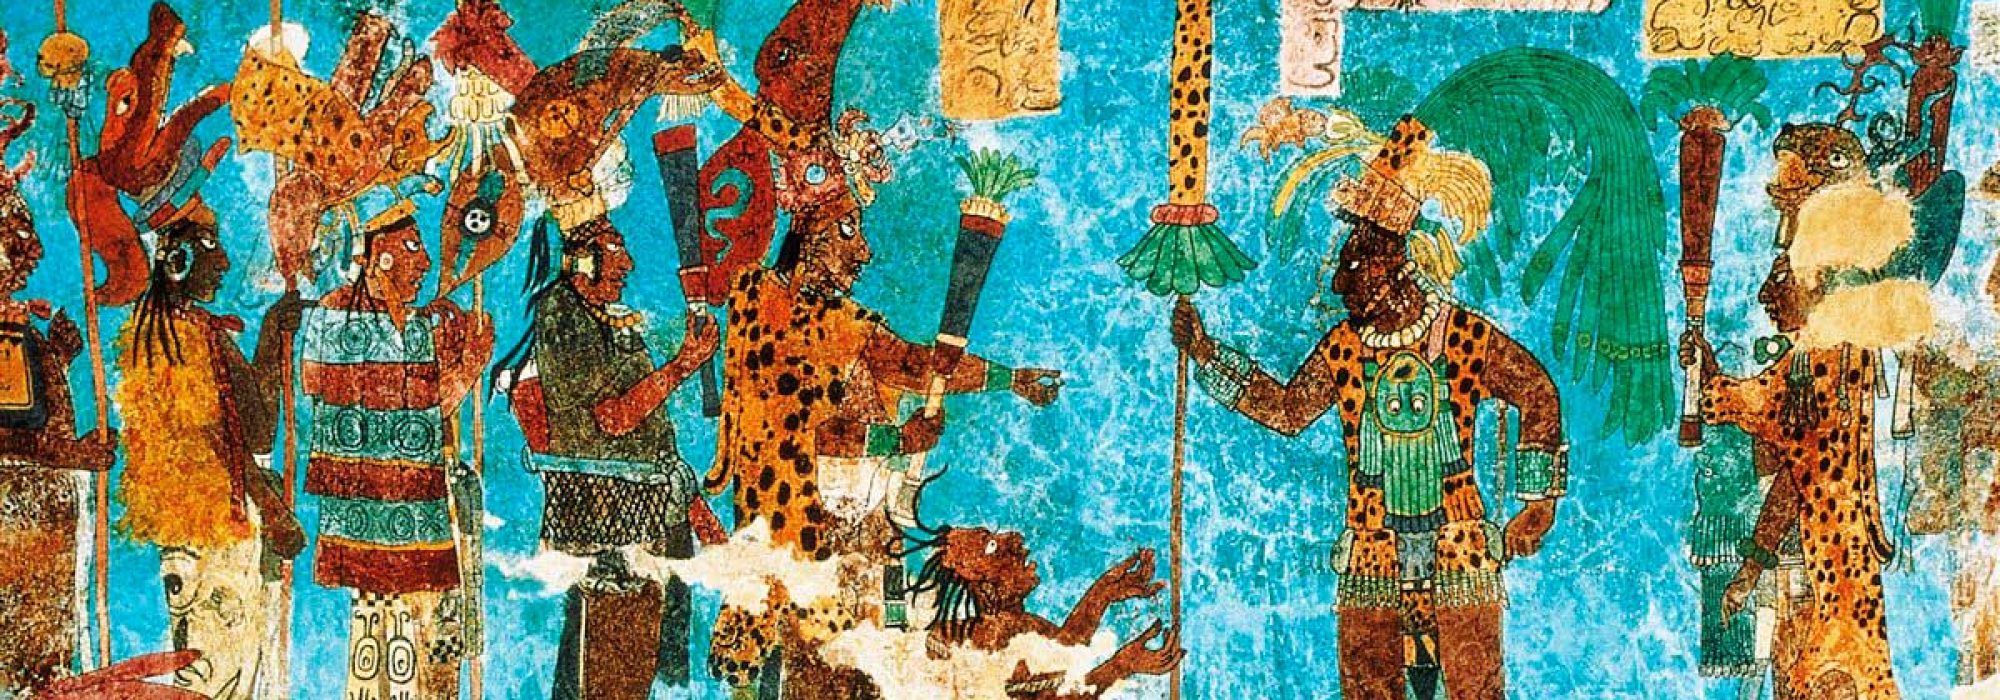 azul-maya-mural-precolombino